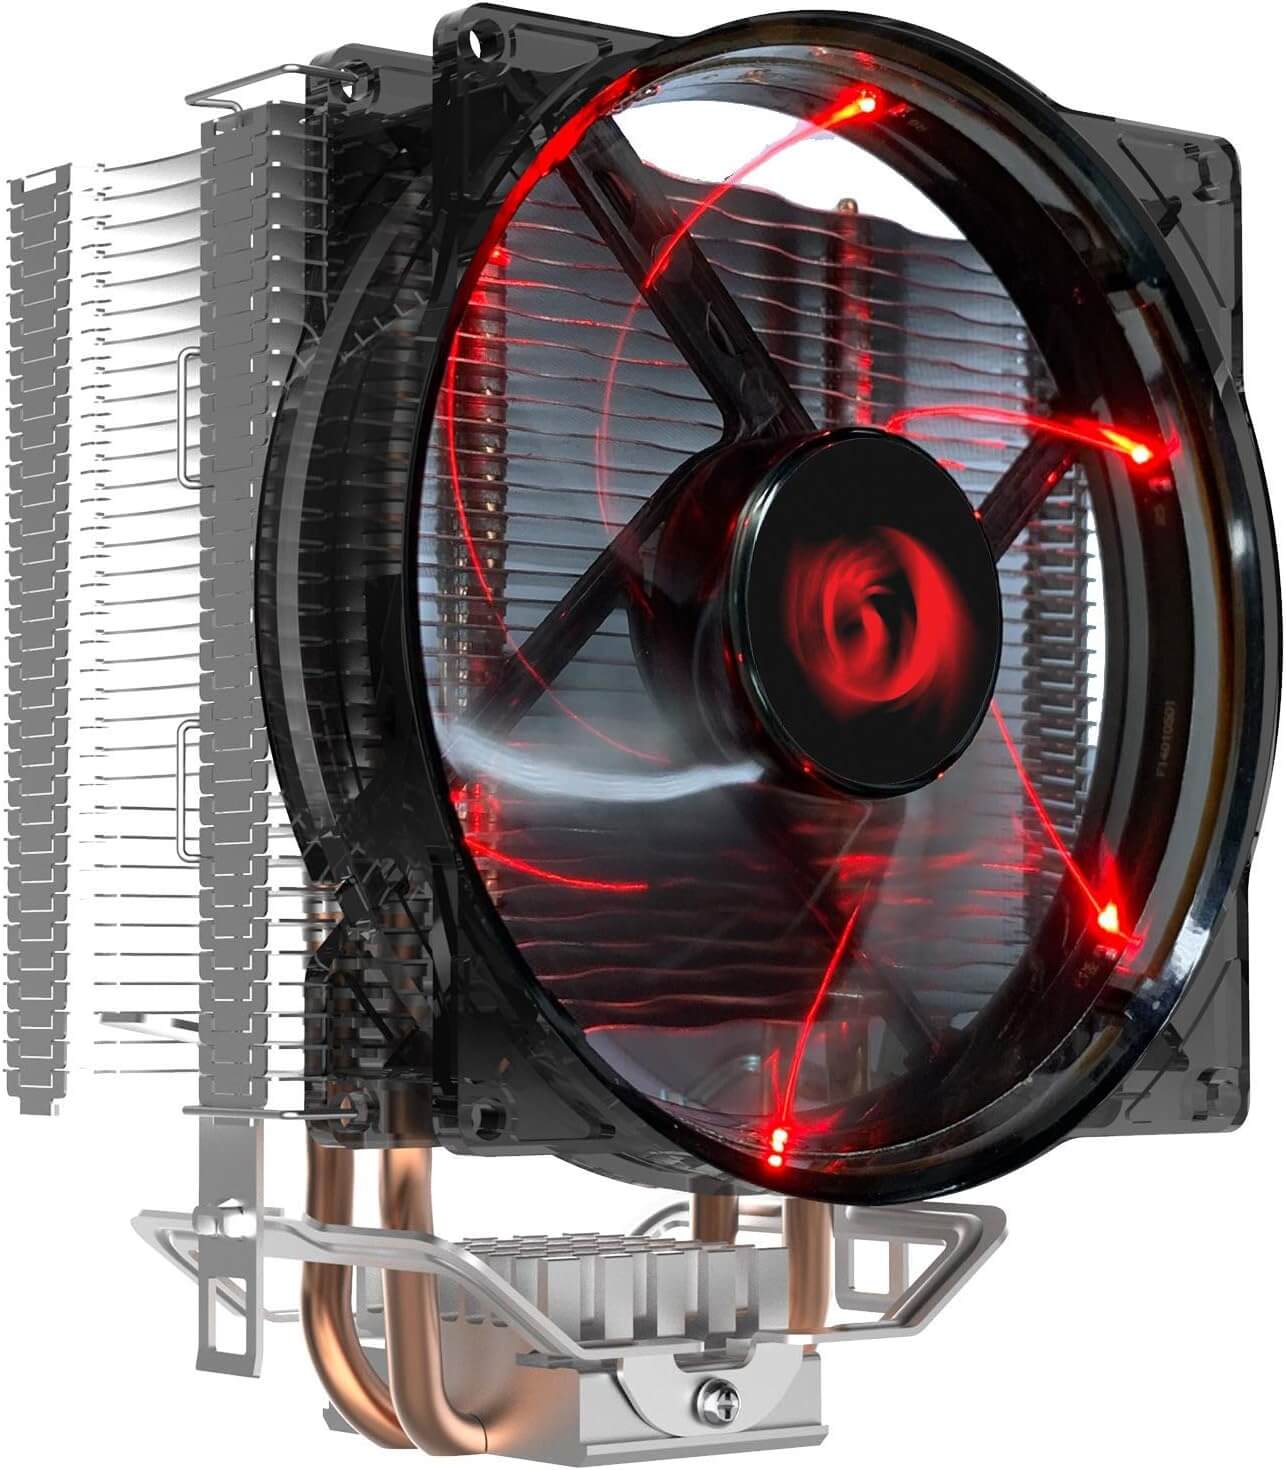 Redragon CC1011 Reaver CPU Cooler Slim Design 2.0 Heatpipes Red LED 120mm Fan Aluminum Blades for AMD Ryzen/Intel LGA1200/1151 Universal Socket Solution 100% RAM Compatibility